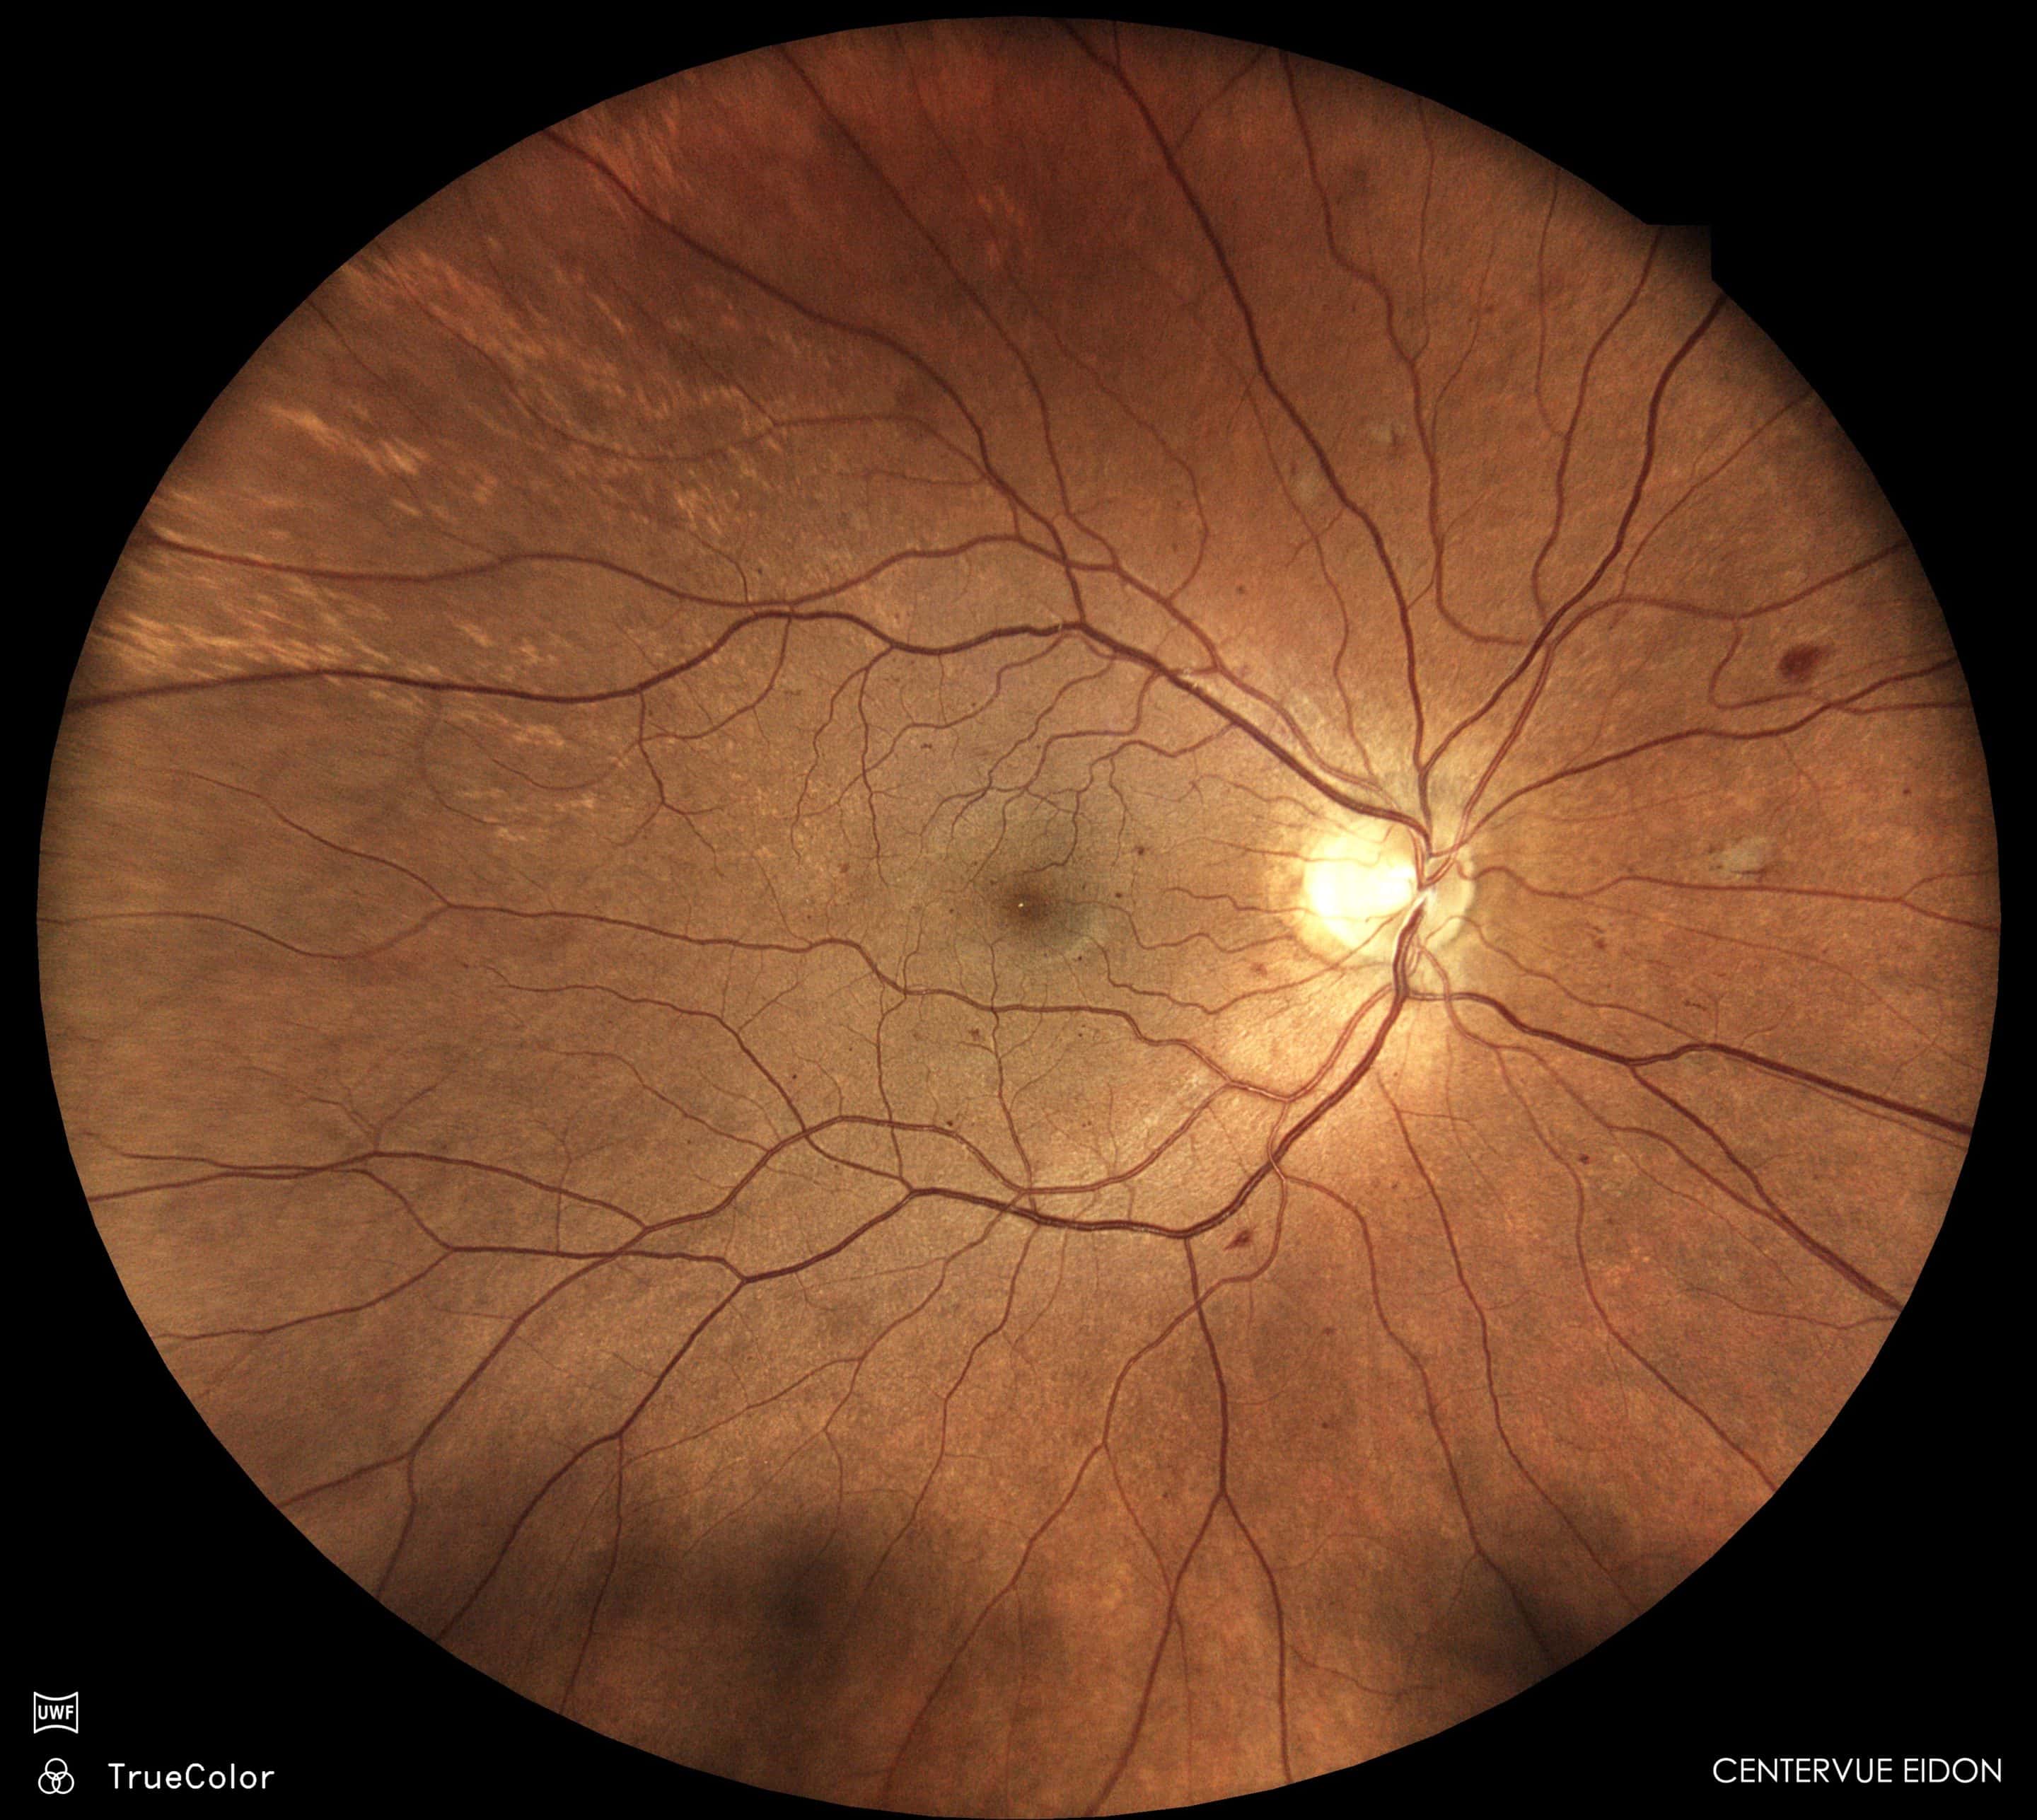 Diabetic retinopathy including haemorrhages in the retina (dark spots) - Neilson Eyecare